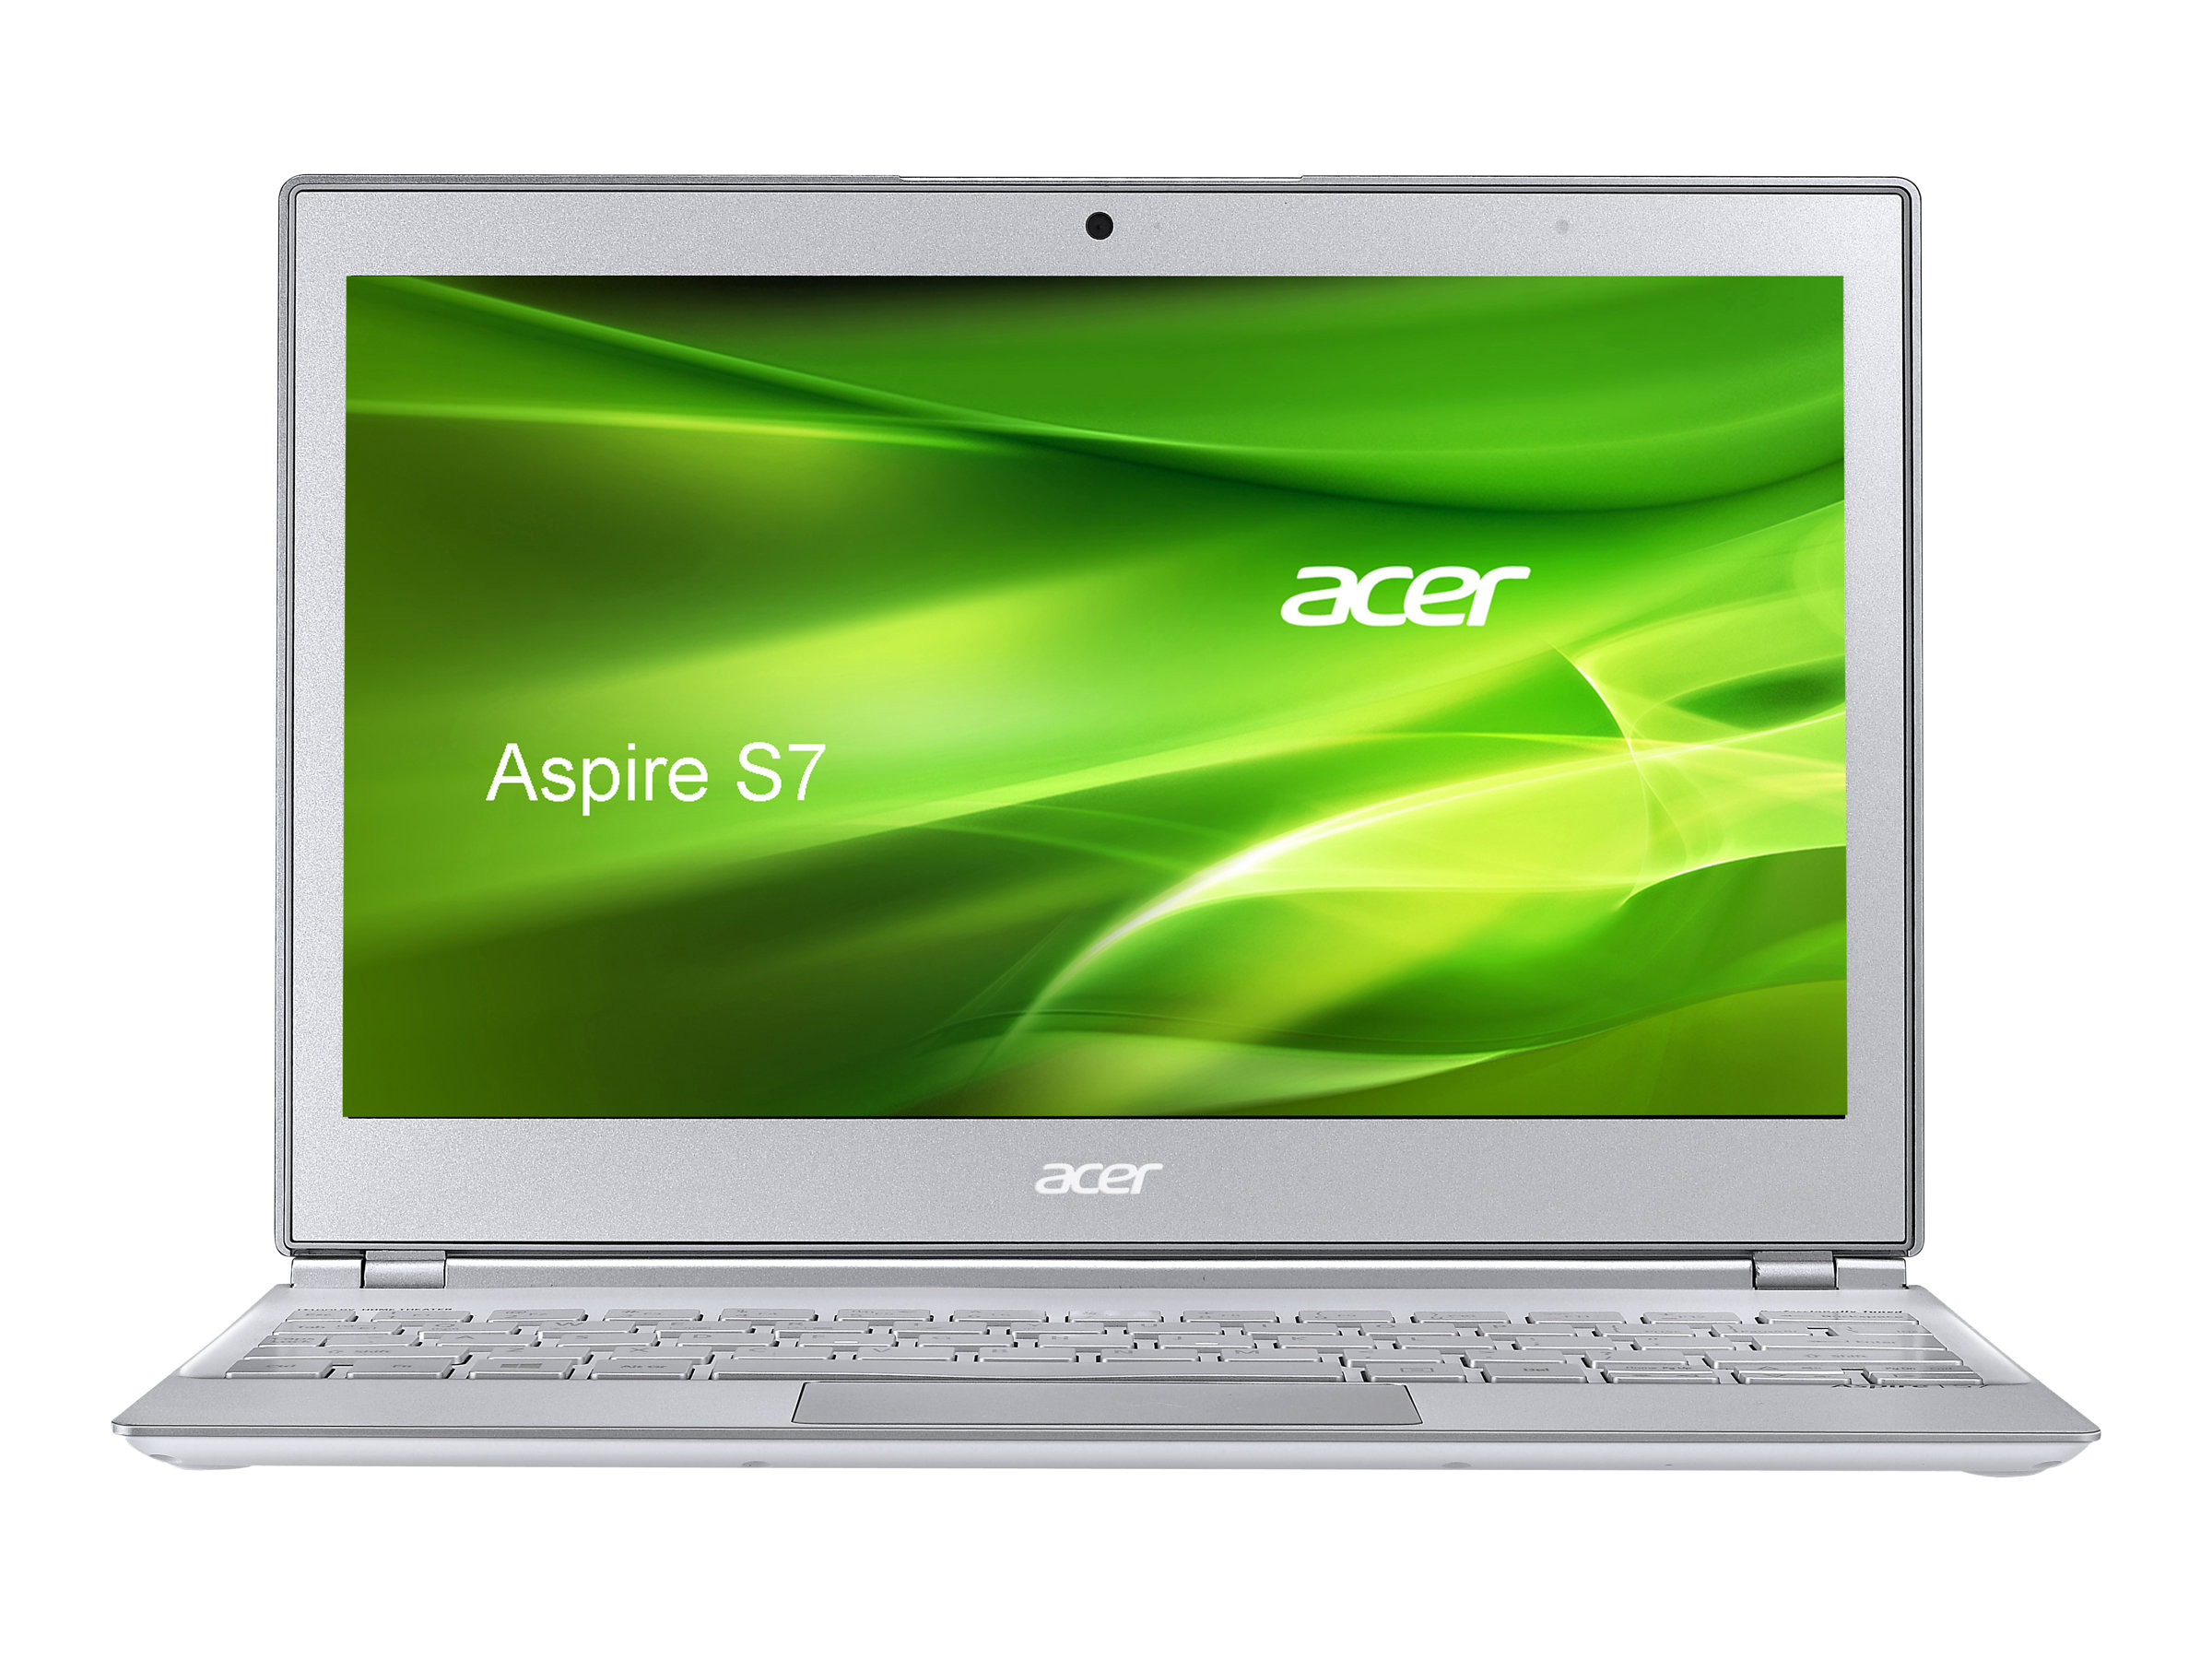 Acer Aspire S7 (191)